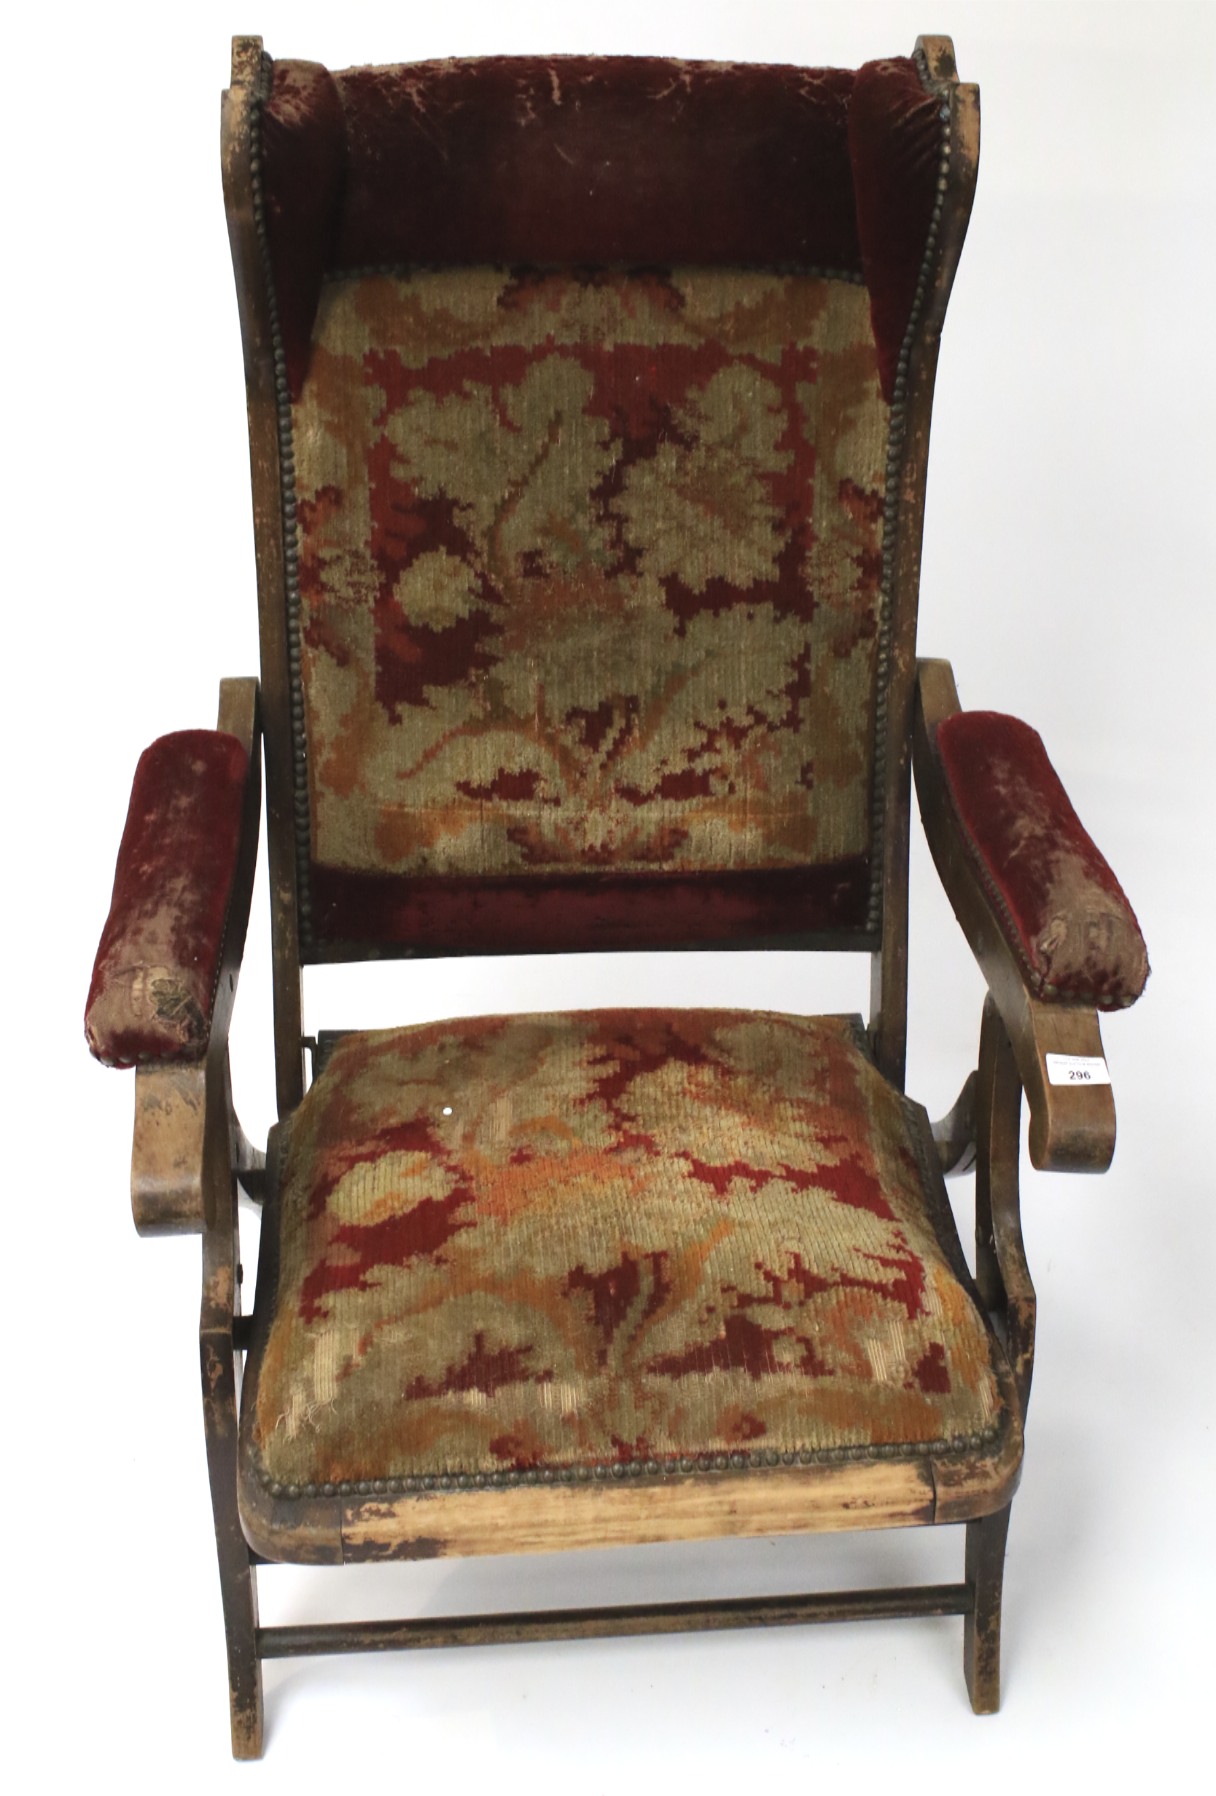 A 19th century folding elbow chair.